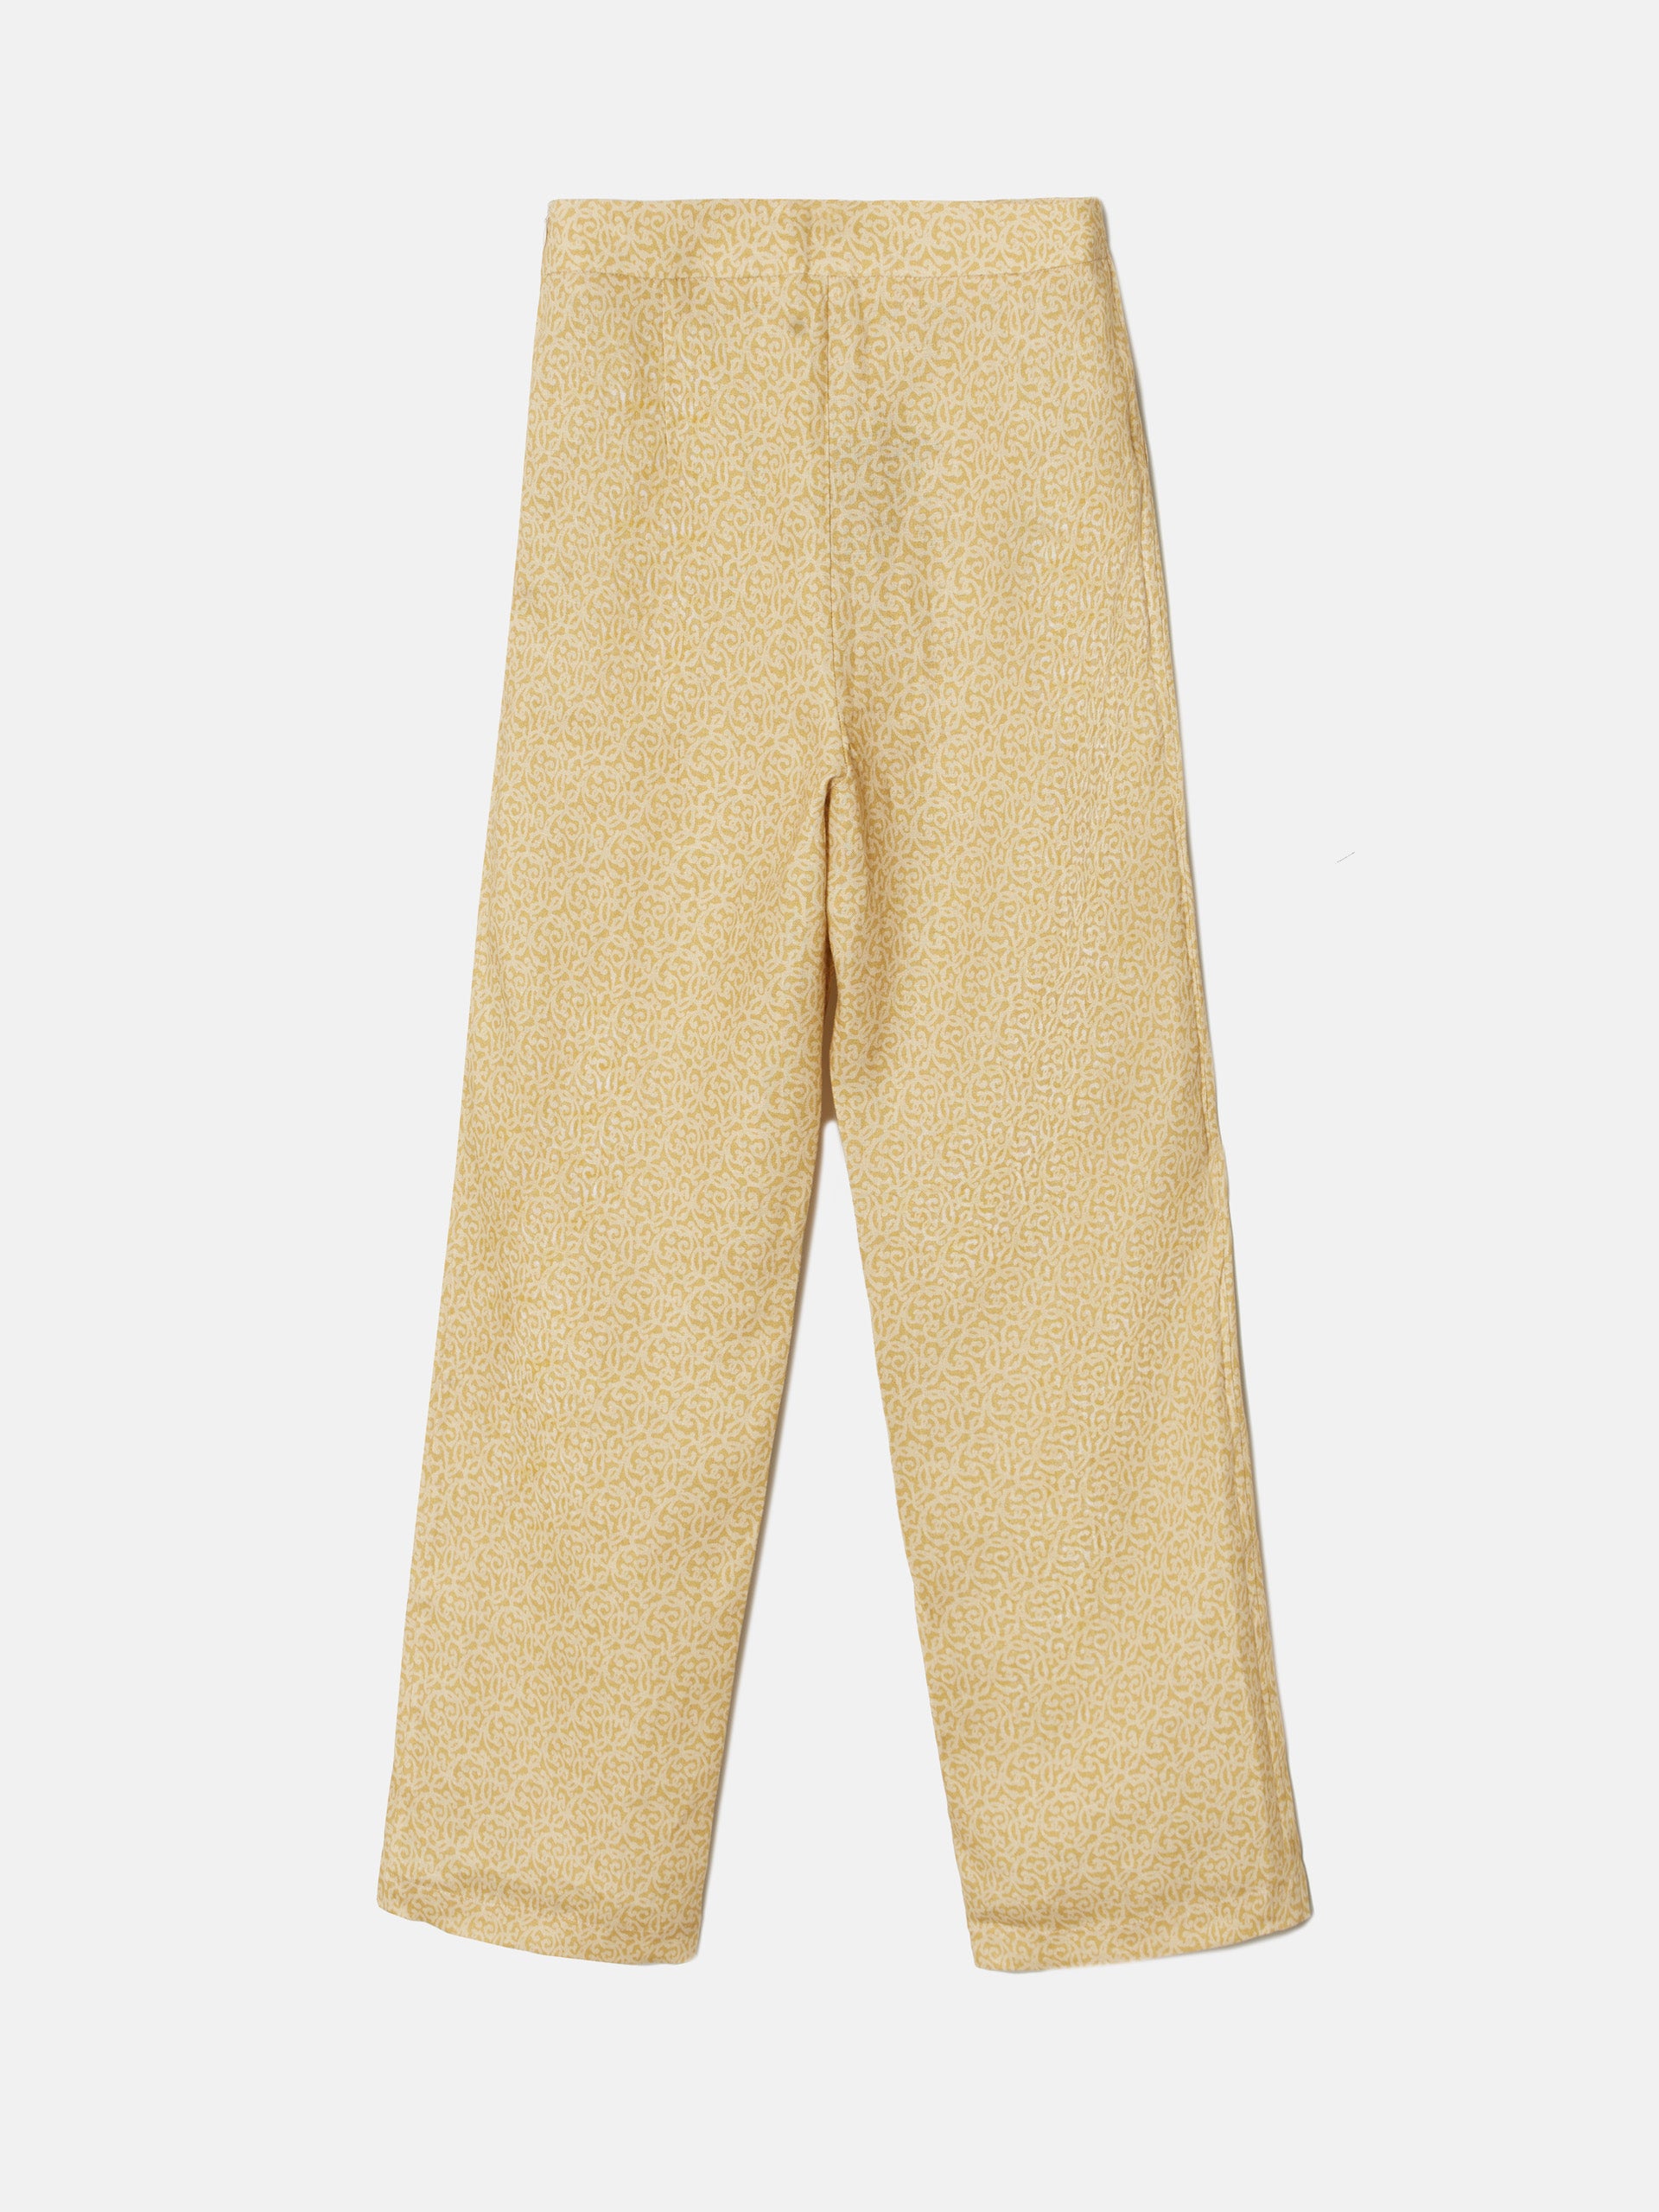 Yellow printed linen pants